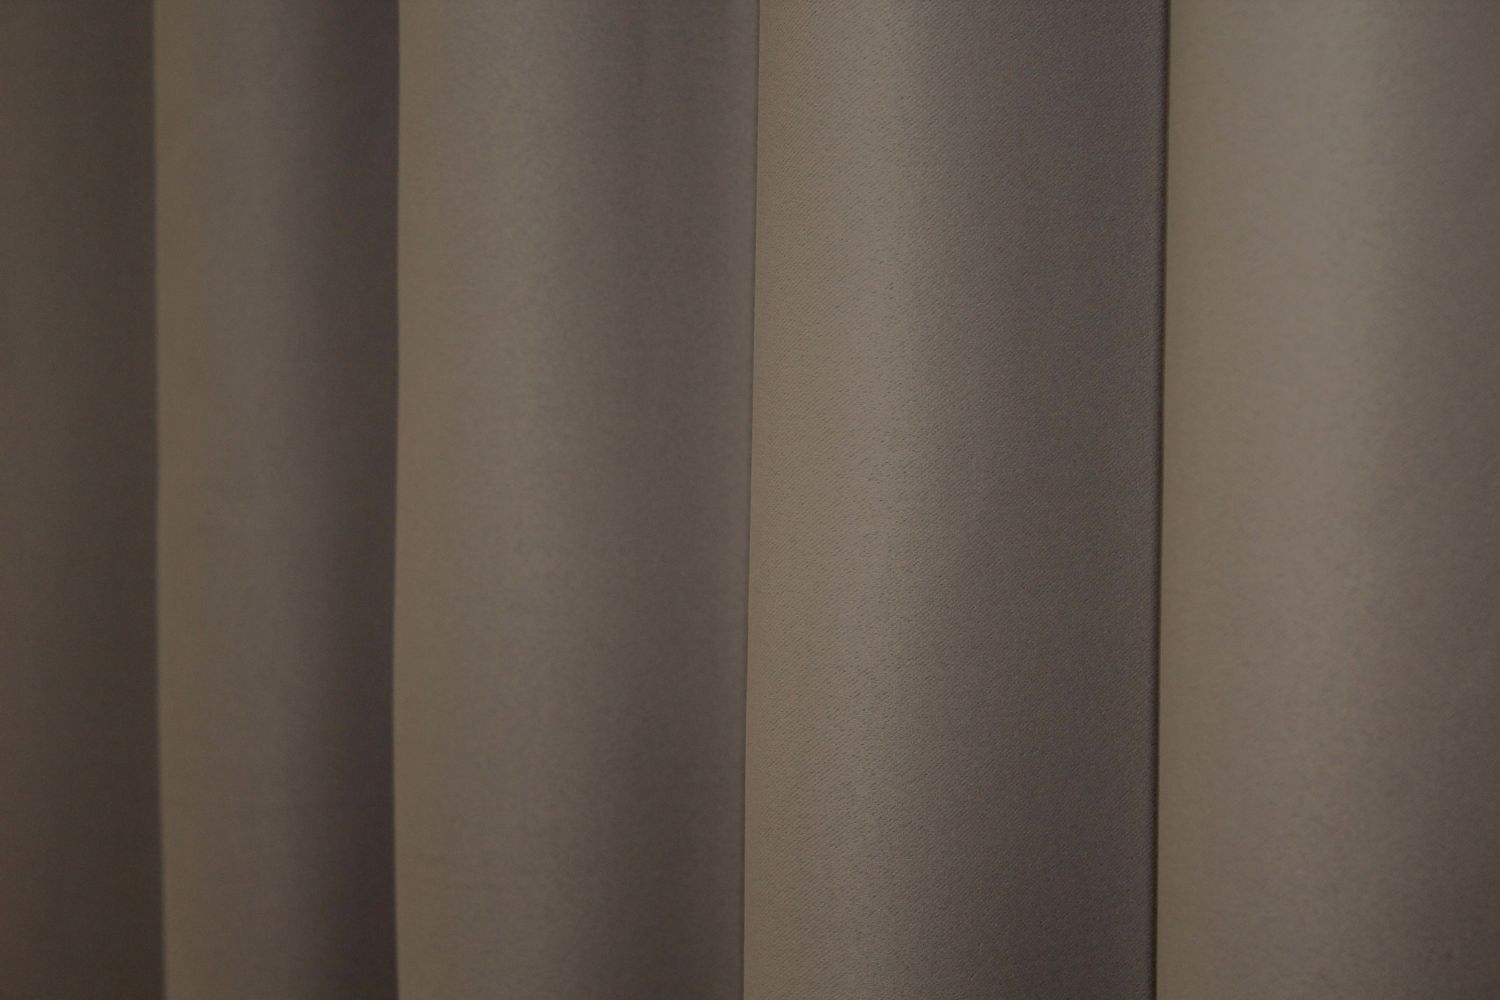 Комплект штор из ткани блэкаут, коллекция "Bagema Rvs" цвет какао 1289ш , Какао, Комплект штор (2шт. 1,0х2,7м.), Классические, Длинные, 1 м., 2,7 м., 100, 270, 1,5 - 2 м., В комплекте 2 шт., Тесьма